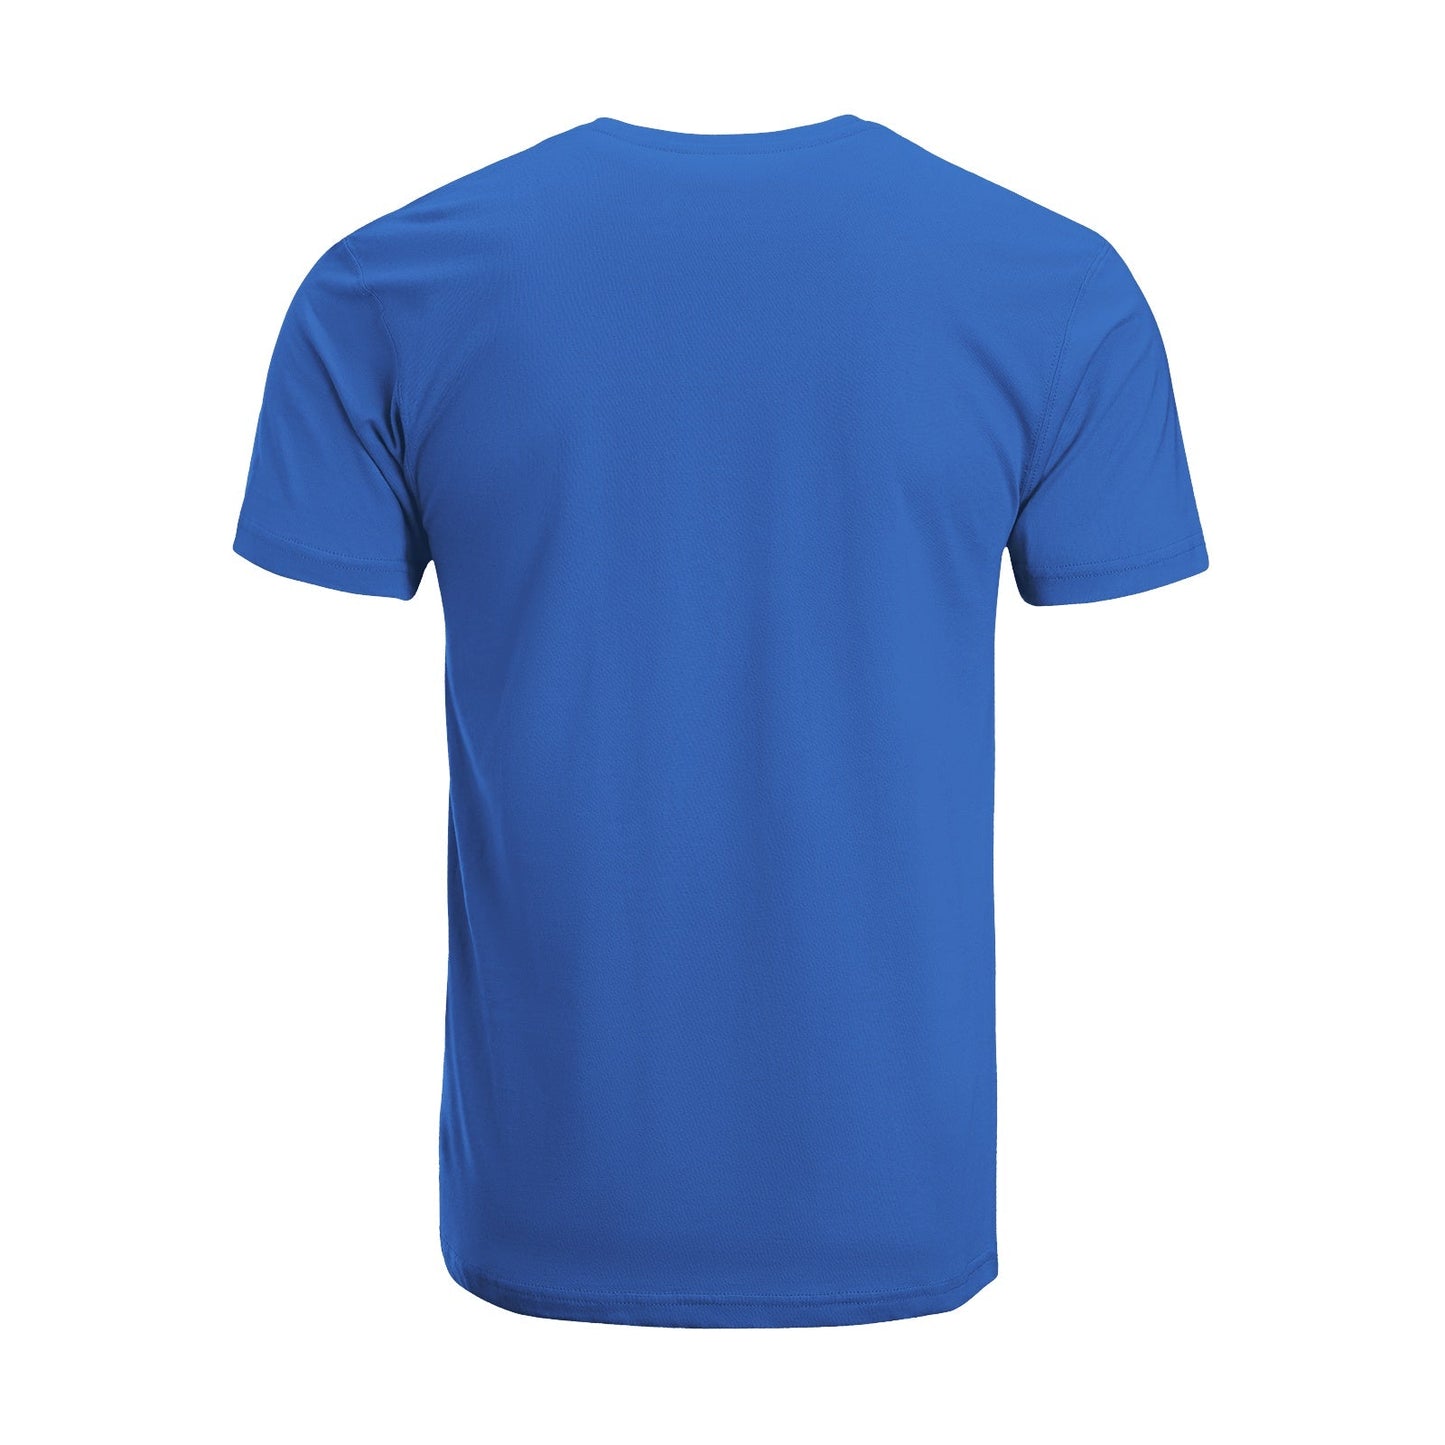 Unisex Short Sleeve Crew Neck Cotton Jersey T-Shirt VEGAN 02